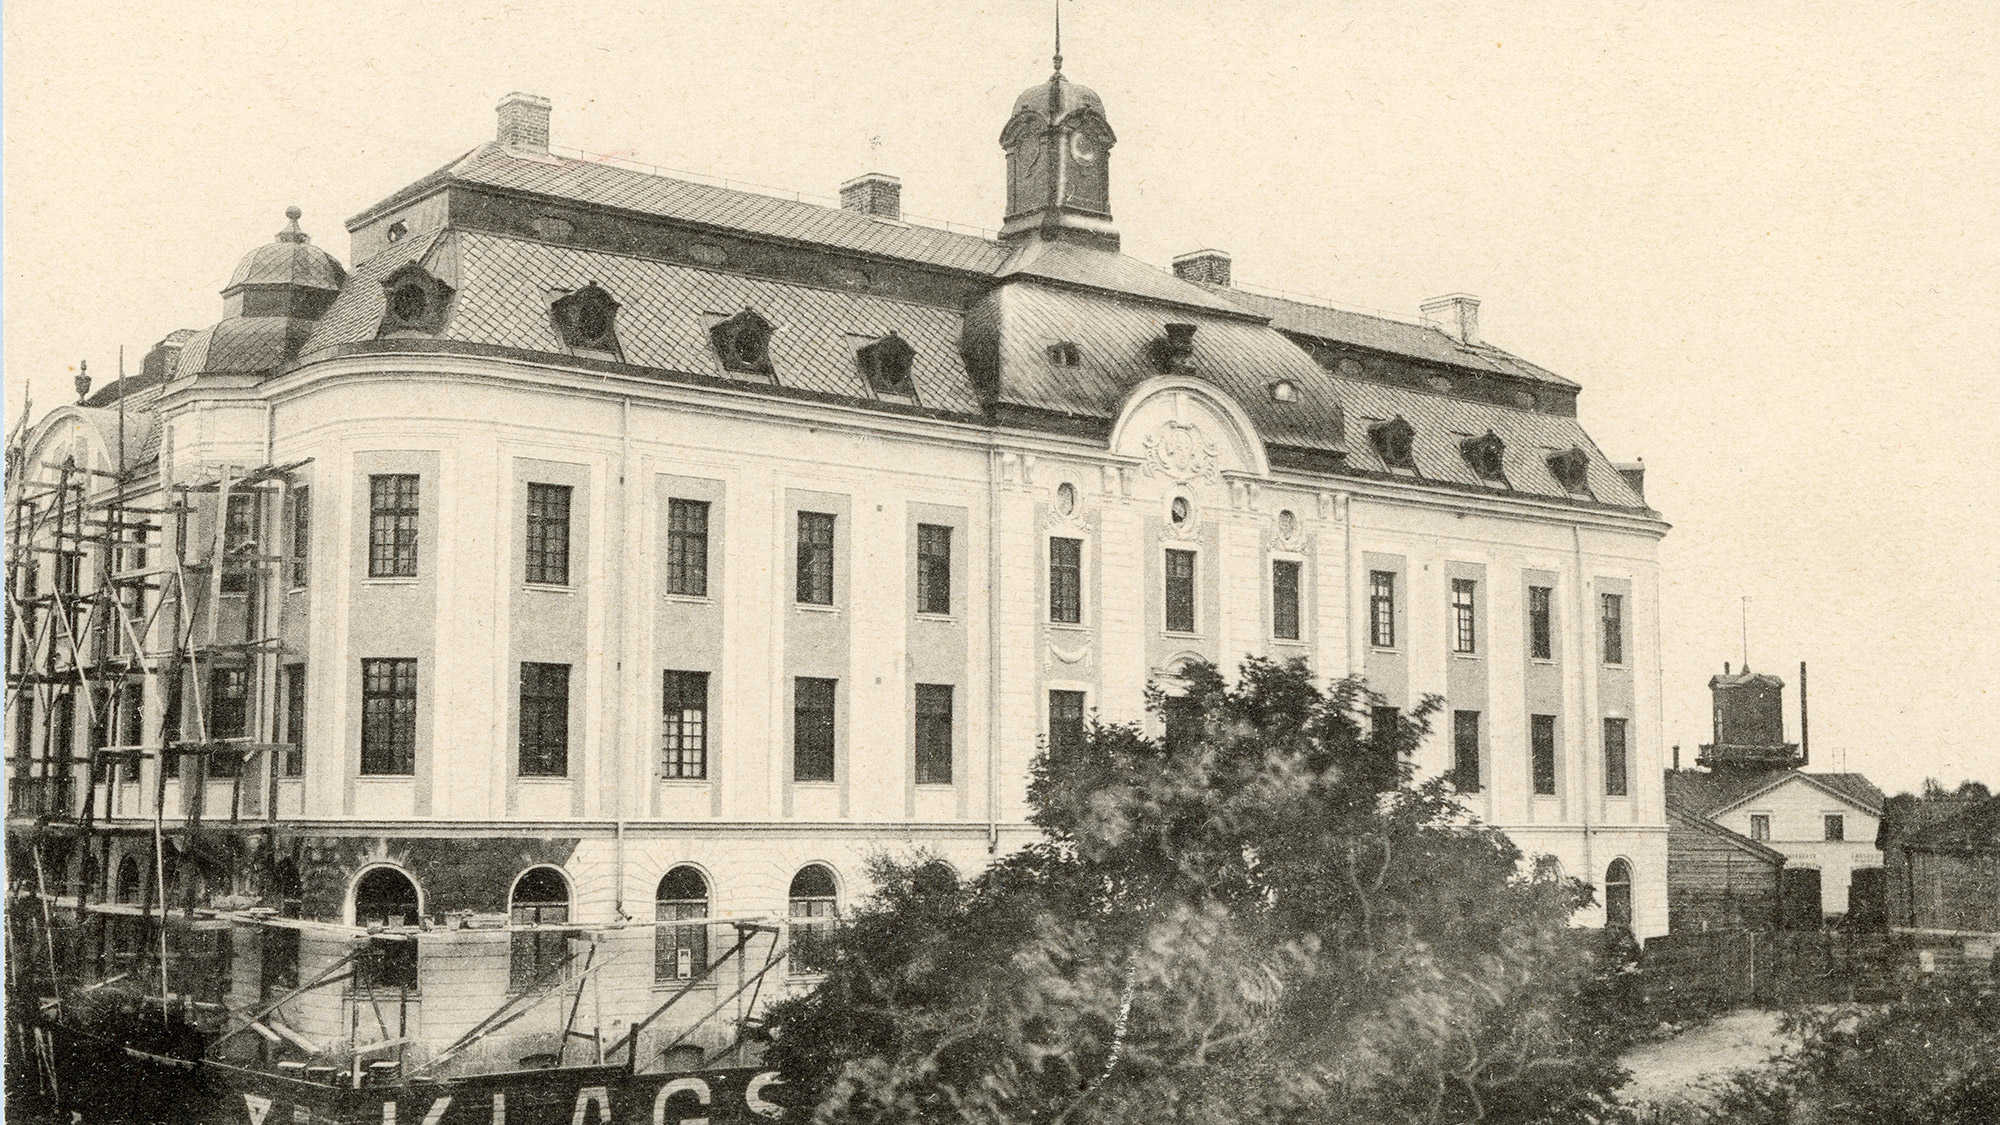 From saving bank in Hudiksvall 1905